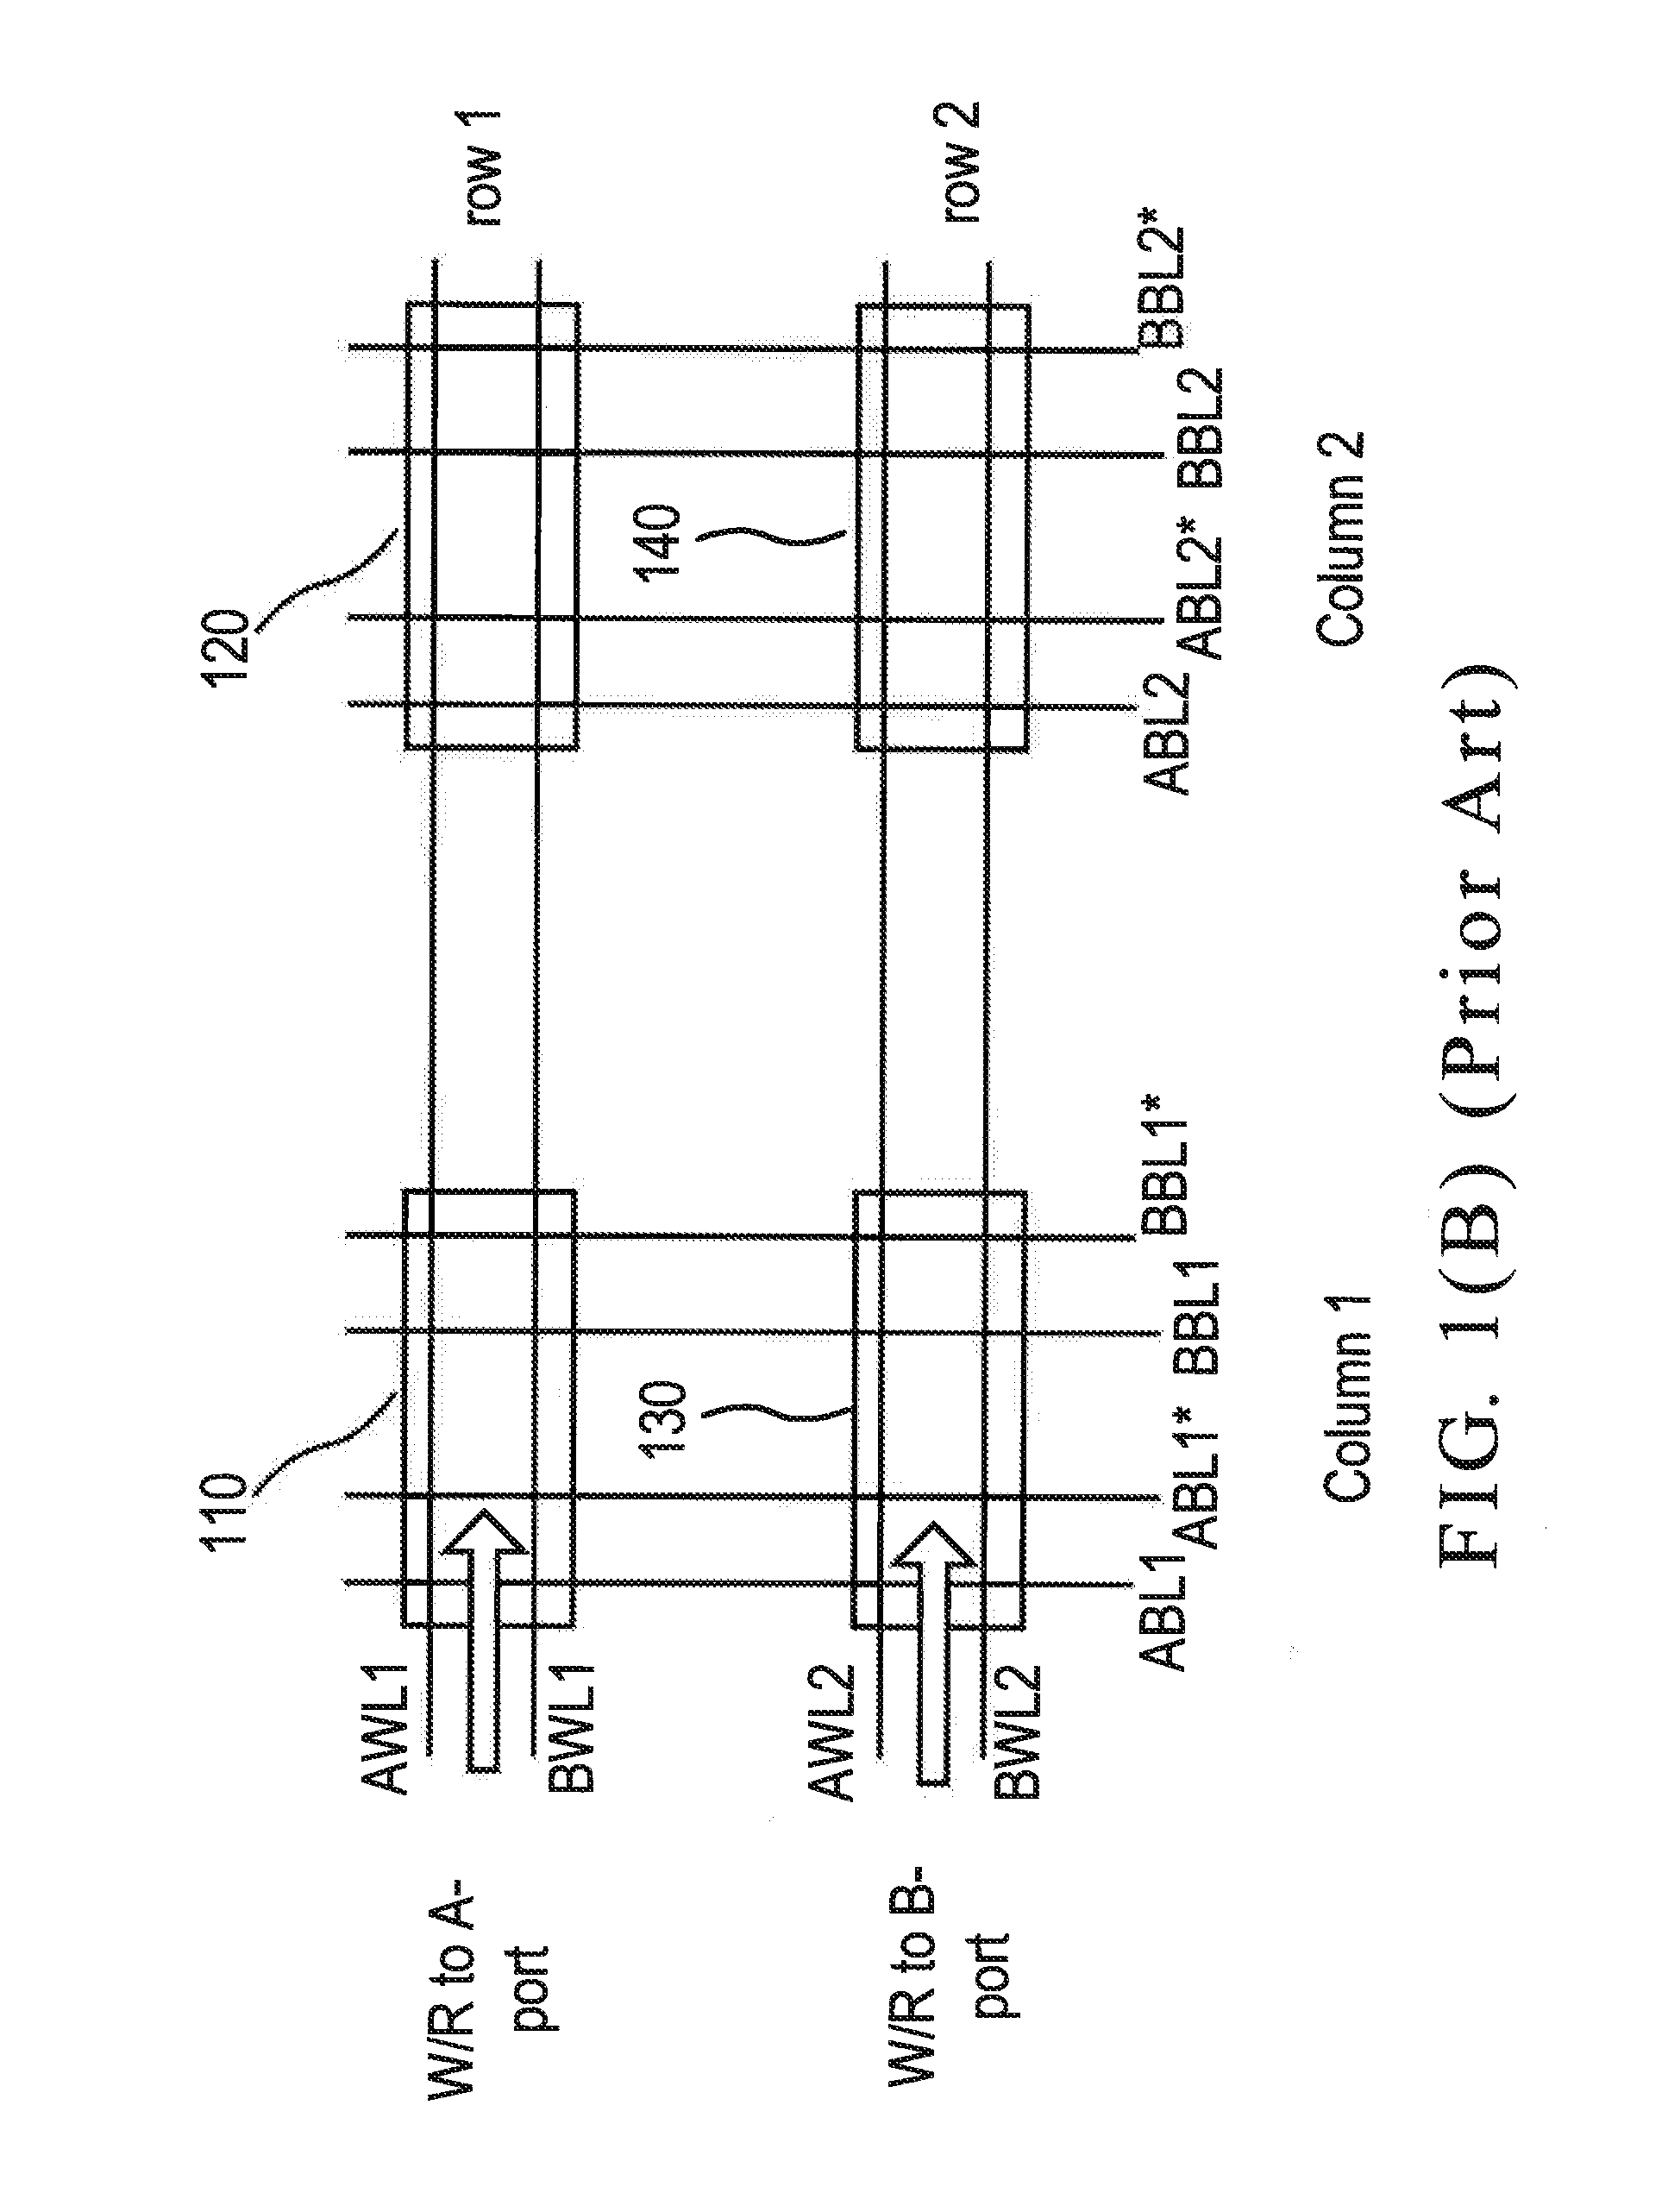 Ten-transistor dual-port SRAM with shared bit-line architecture